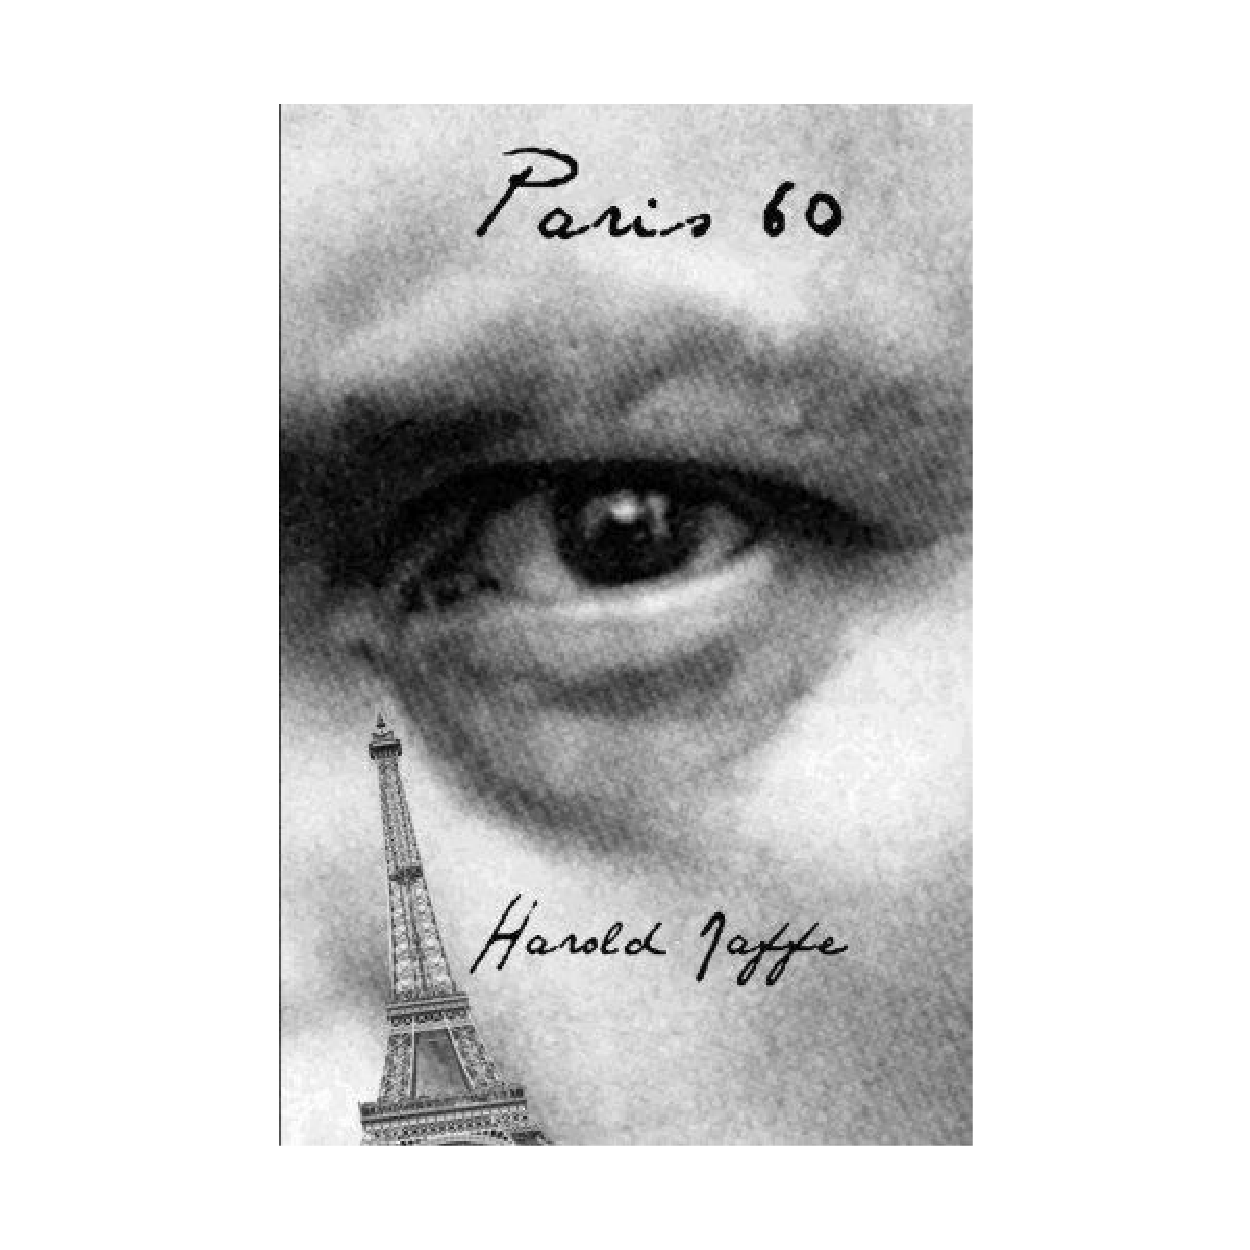 Paris 60 (Short-Fiction Collection) by Harold Jaffe